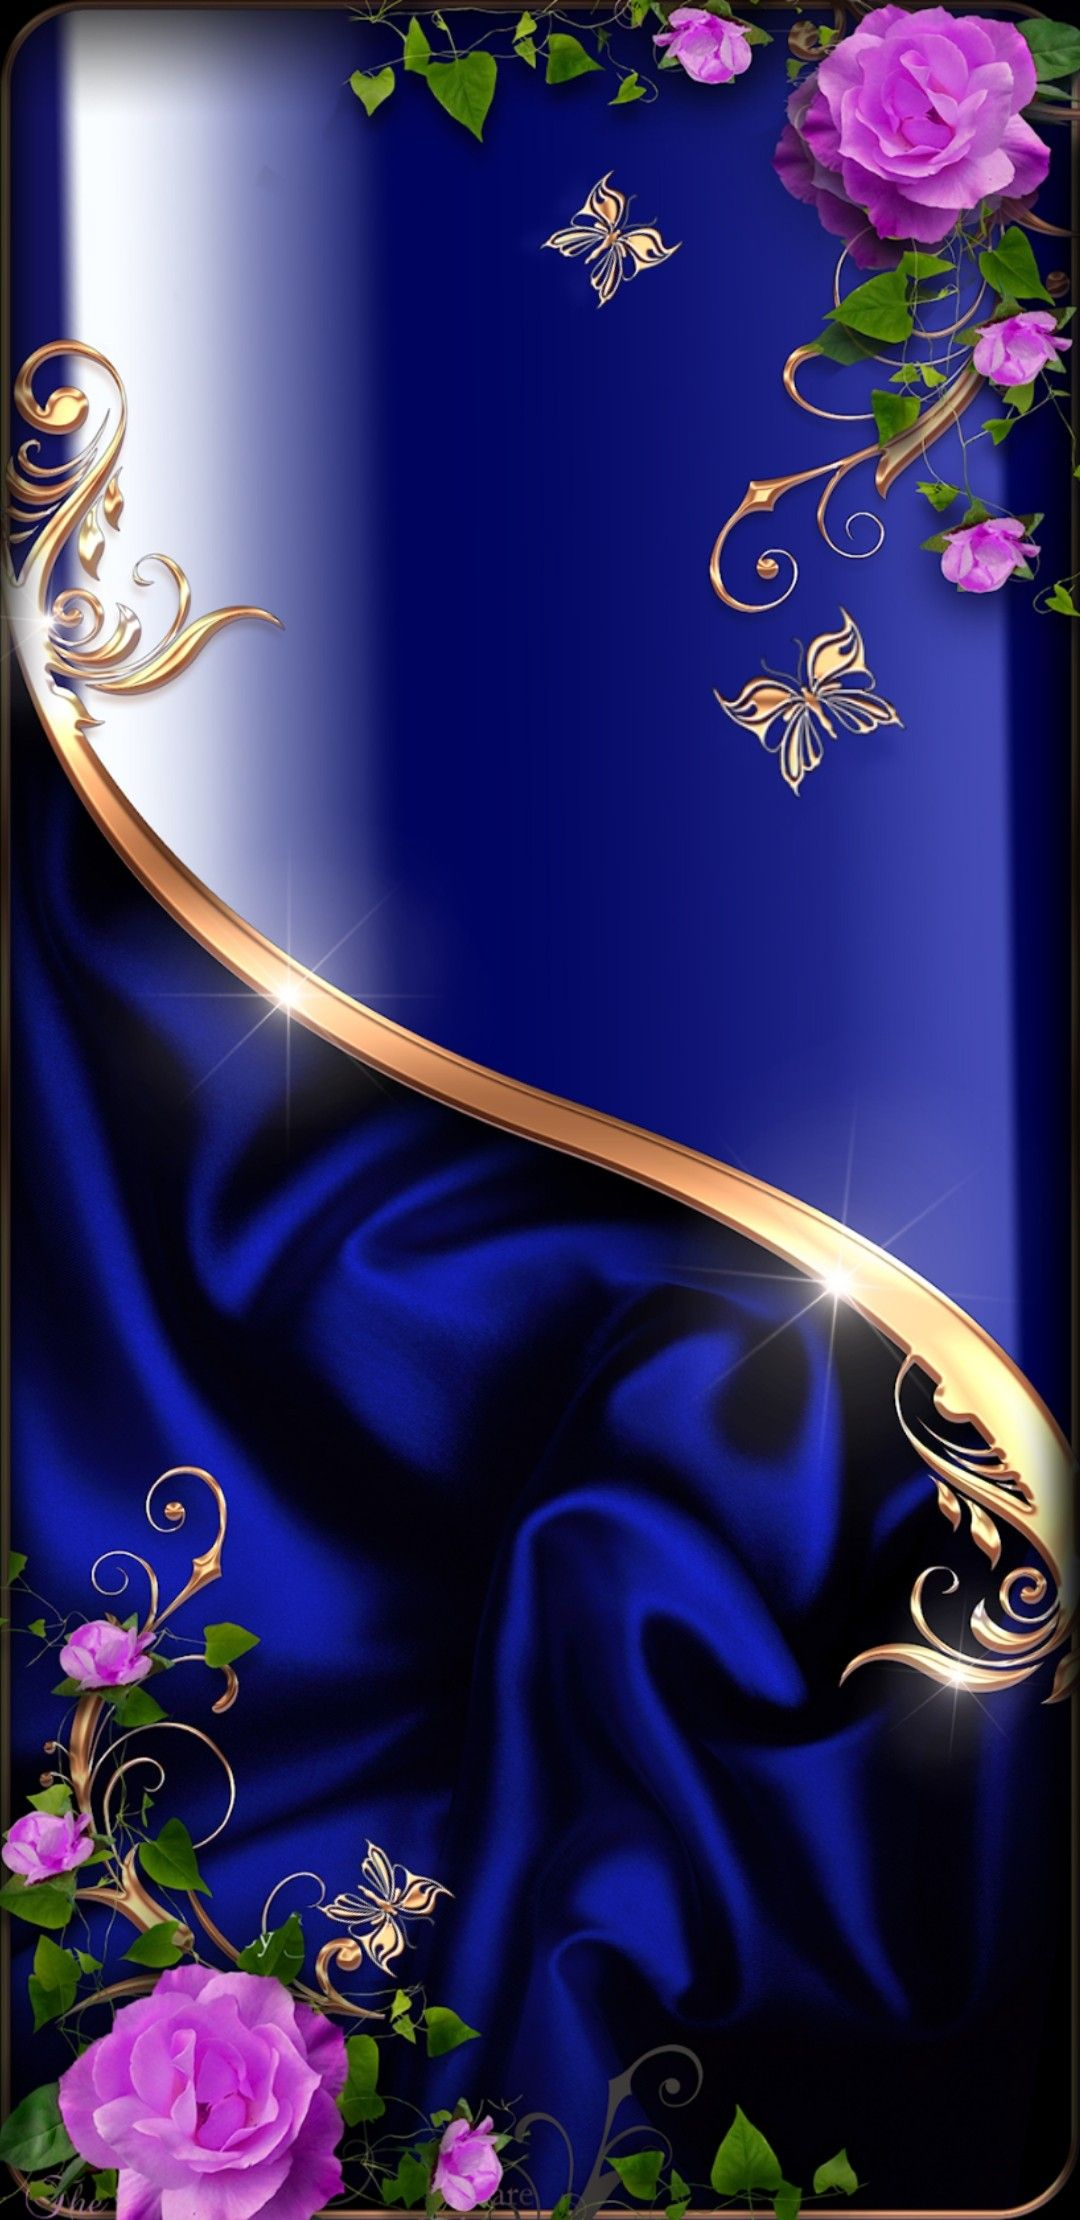 1080x2220 Artist | Rose gold wallpaper iphone, Love wallpaper backgrounds, Pretty wallpapers